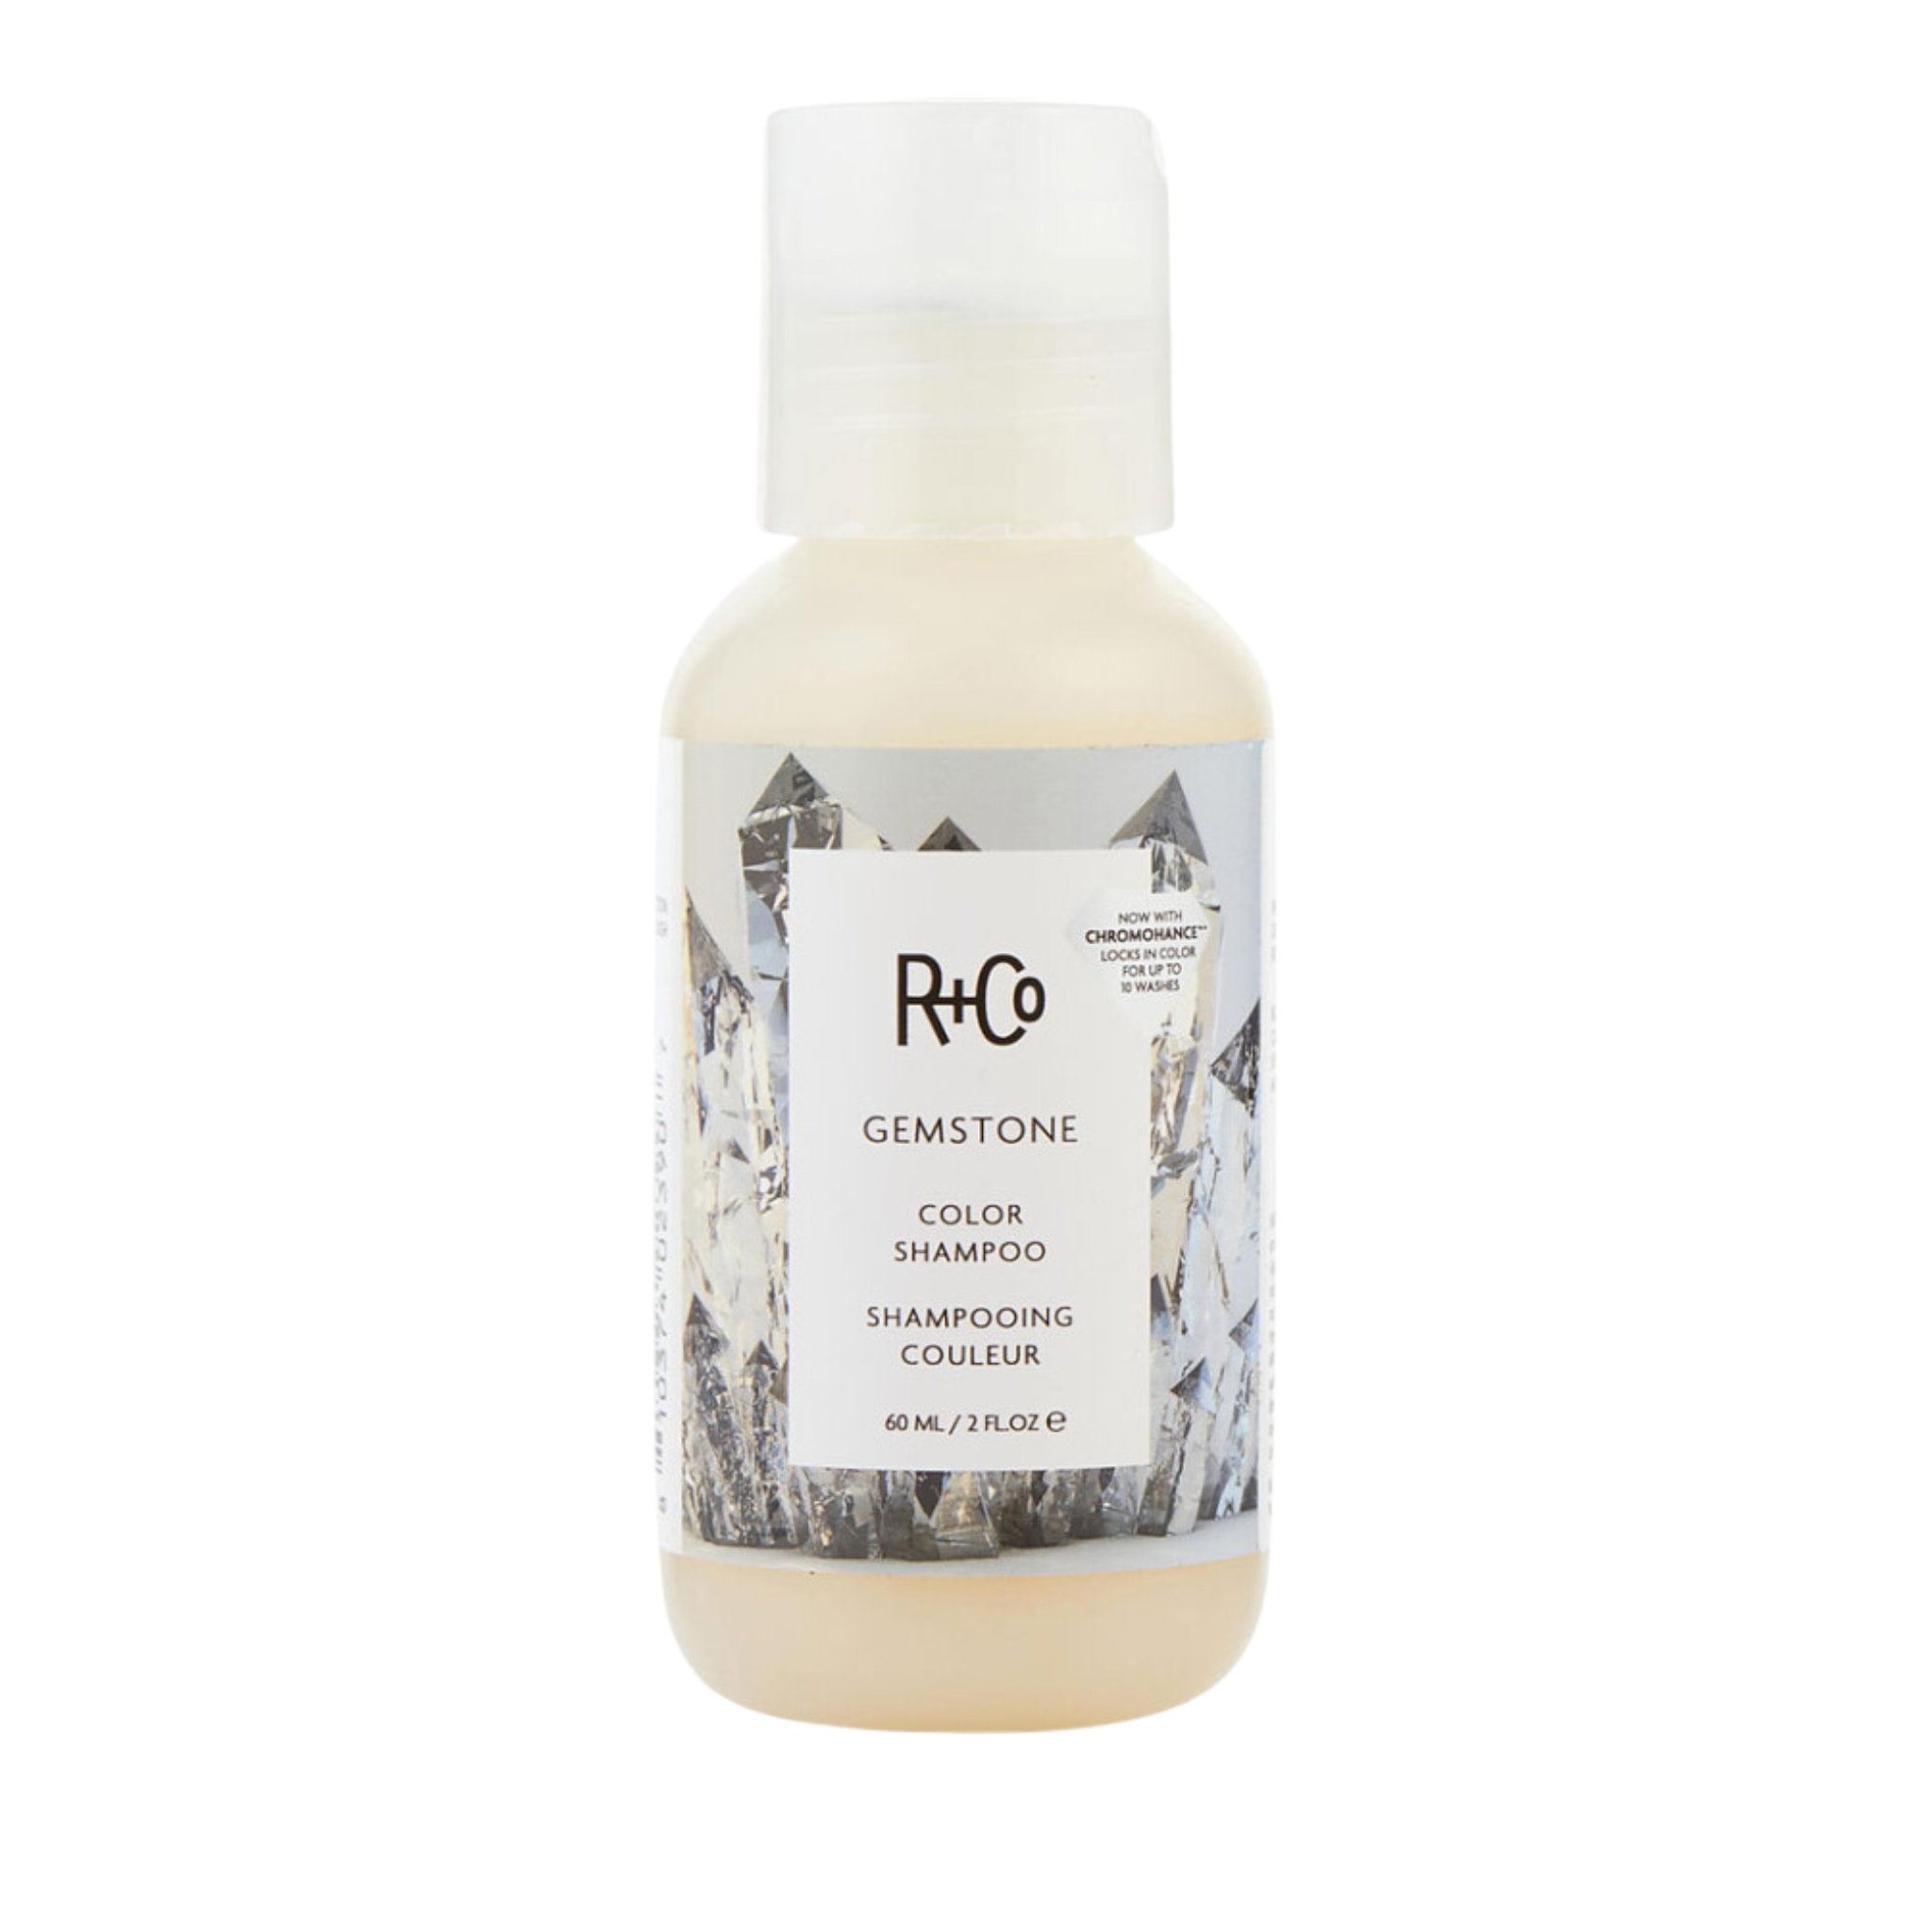 R+Co. Gemstone Shampoing Couleur - 50 ml - Concept C. Shop